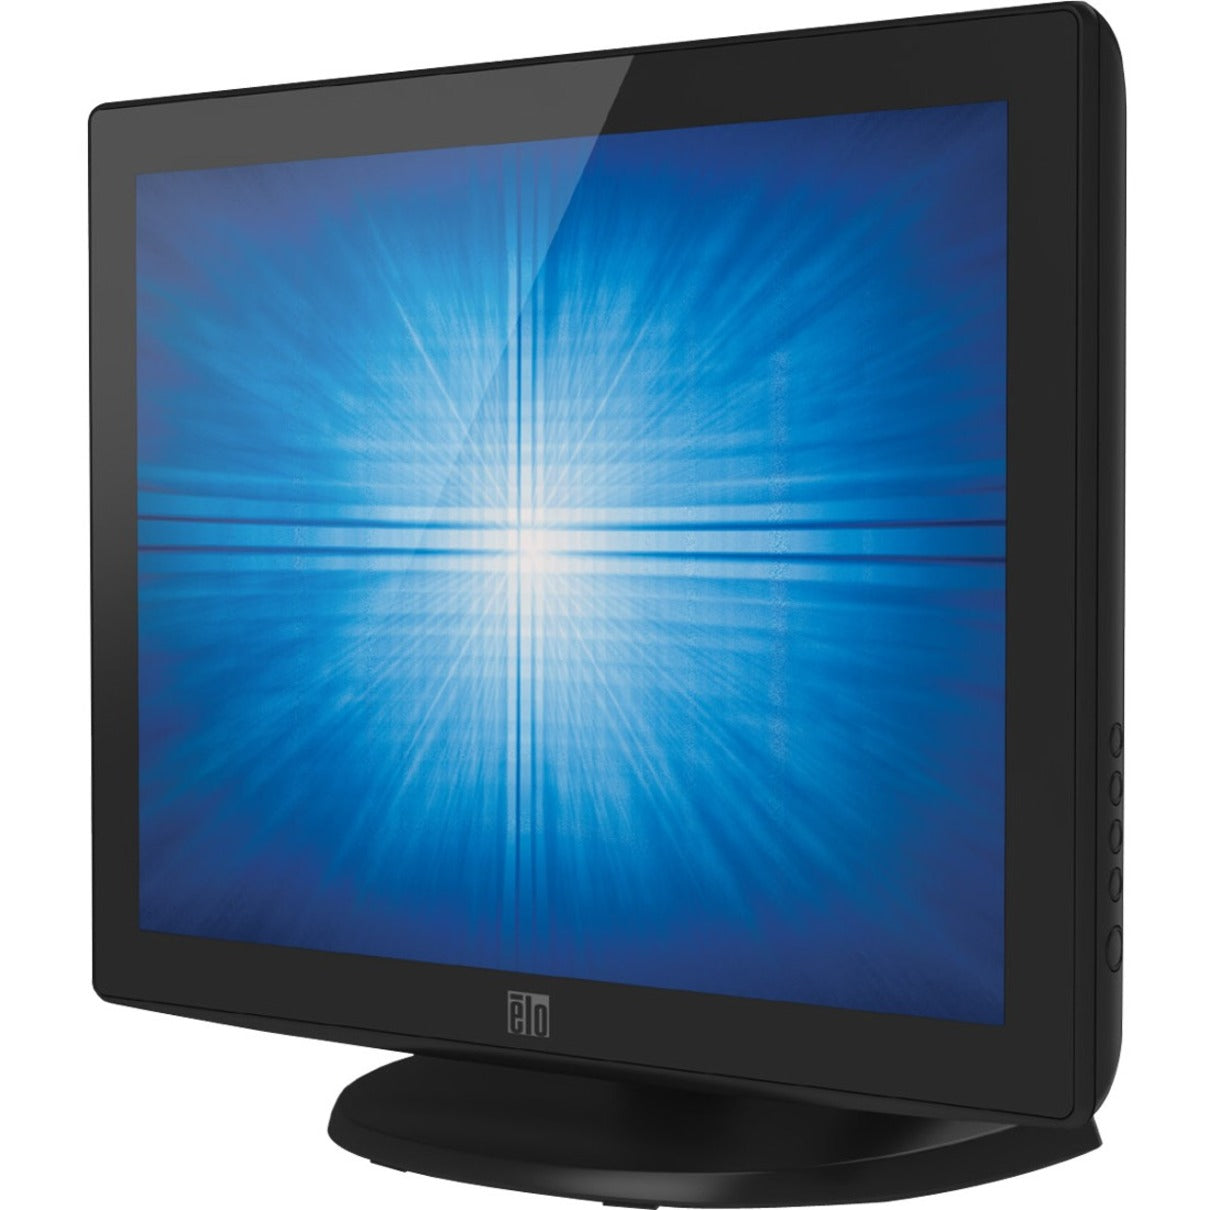 Elo E700813 1000 Series 1515L Touch Screen Monitor, 15 XGA, Anti-glare, USB/VGA/Serial Port, 3 Year Warranty